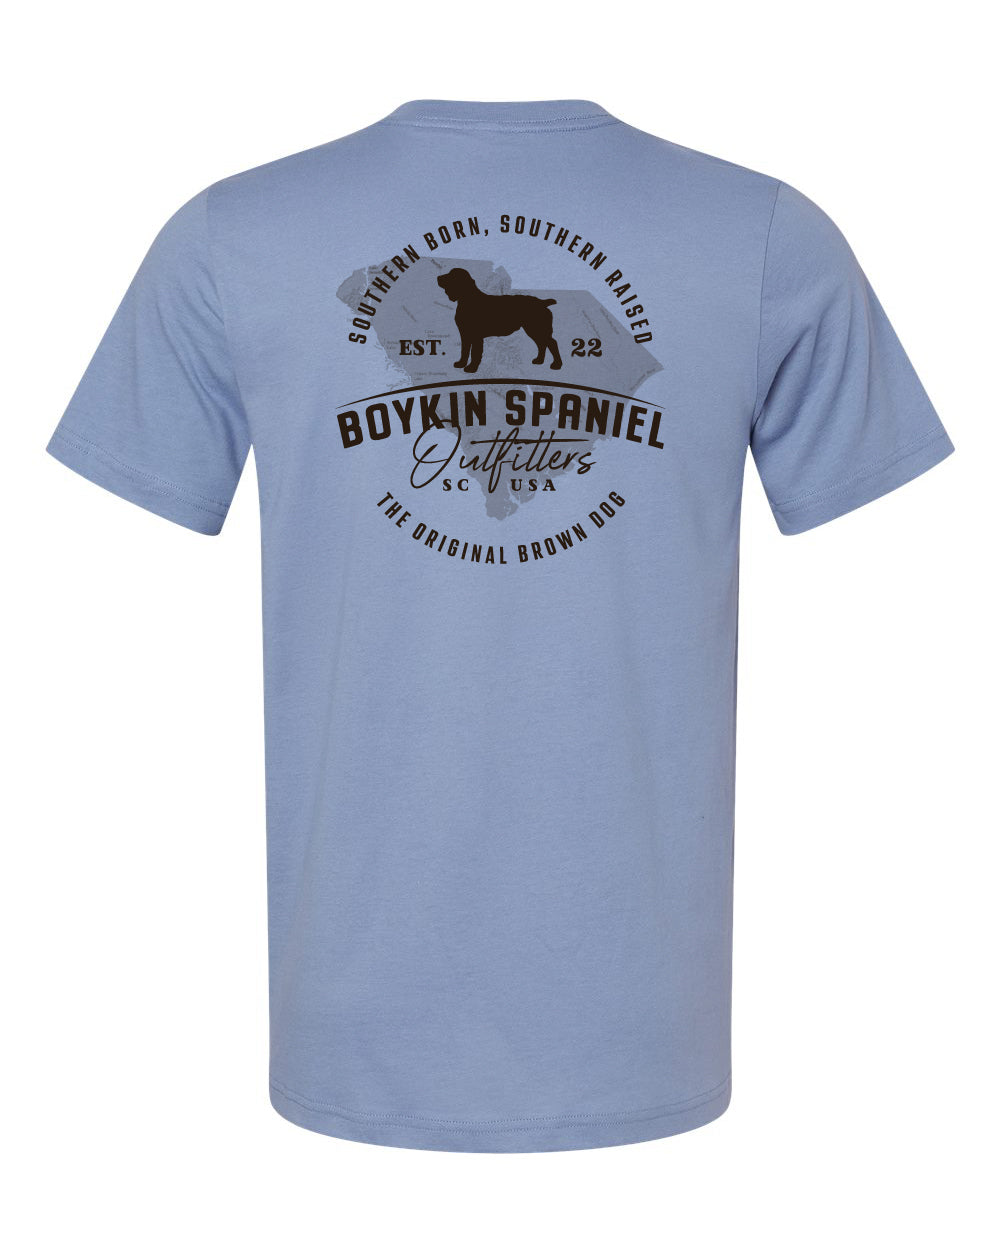 South Carolina's Original Brown Dog - Boykin Spaniel Short Sleeve 100% Cotton Lightweight Tee